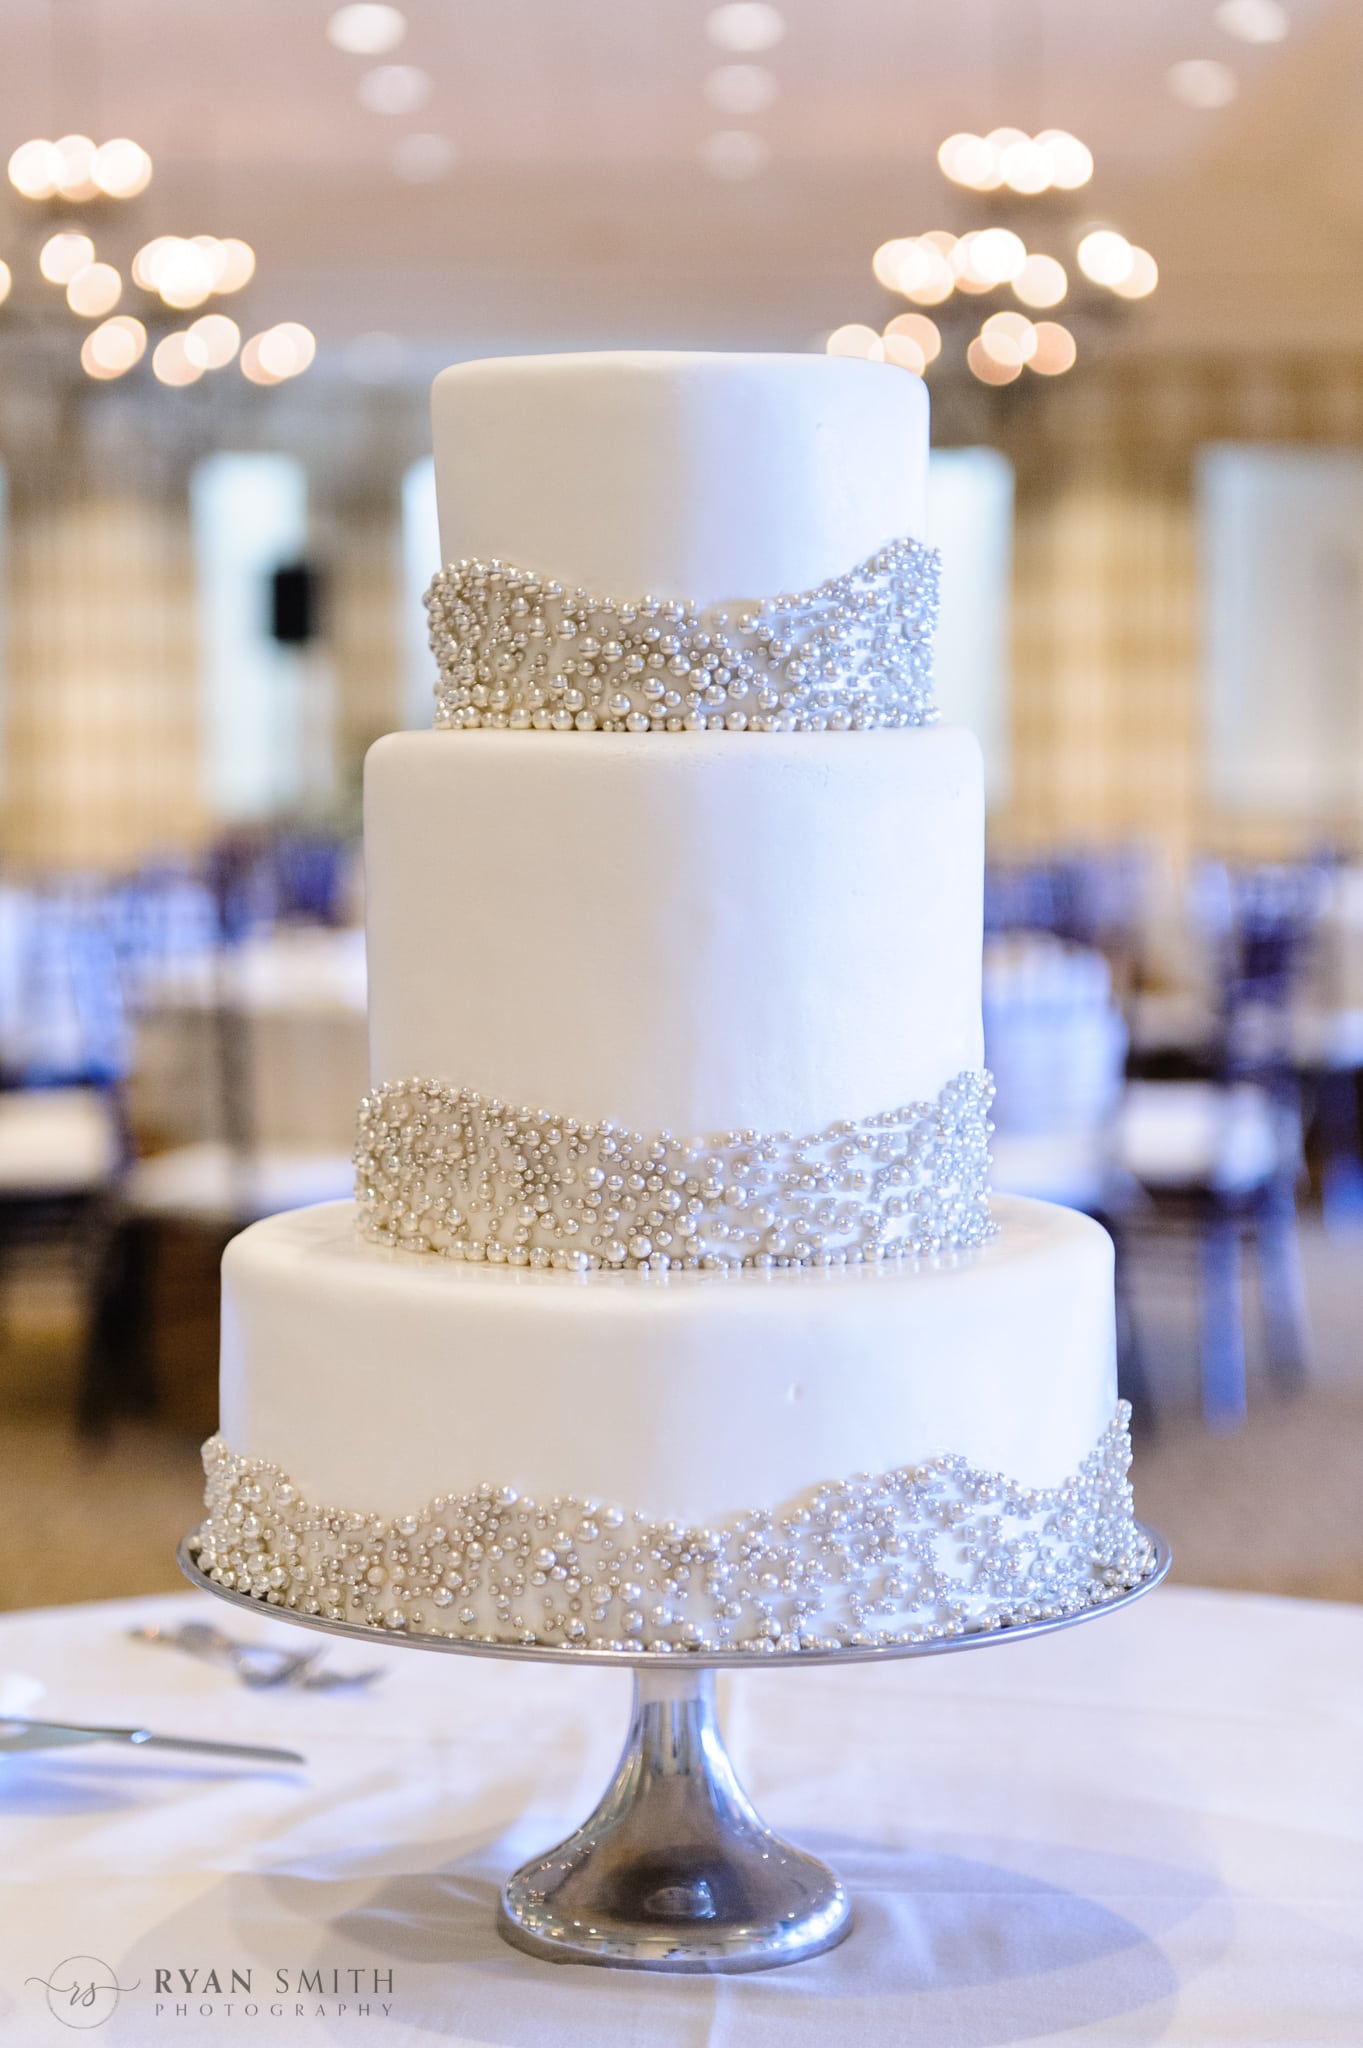 Closeup of the wedding cake - Daniel Island Club - Charleston, SC